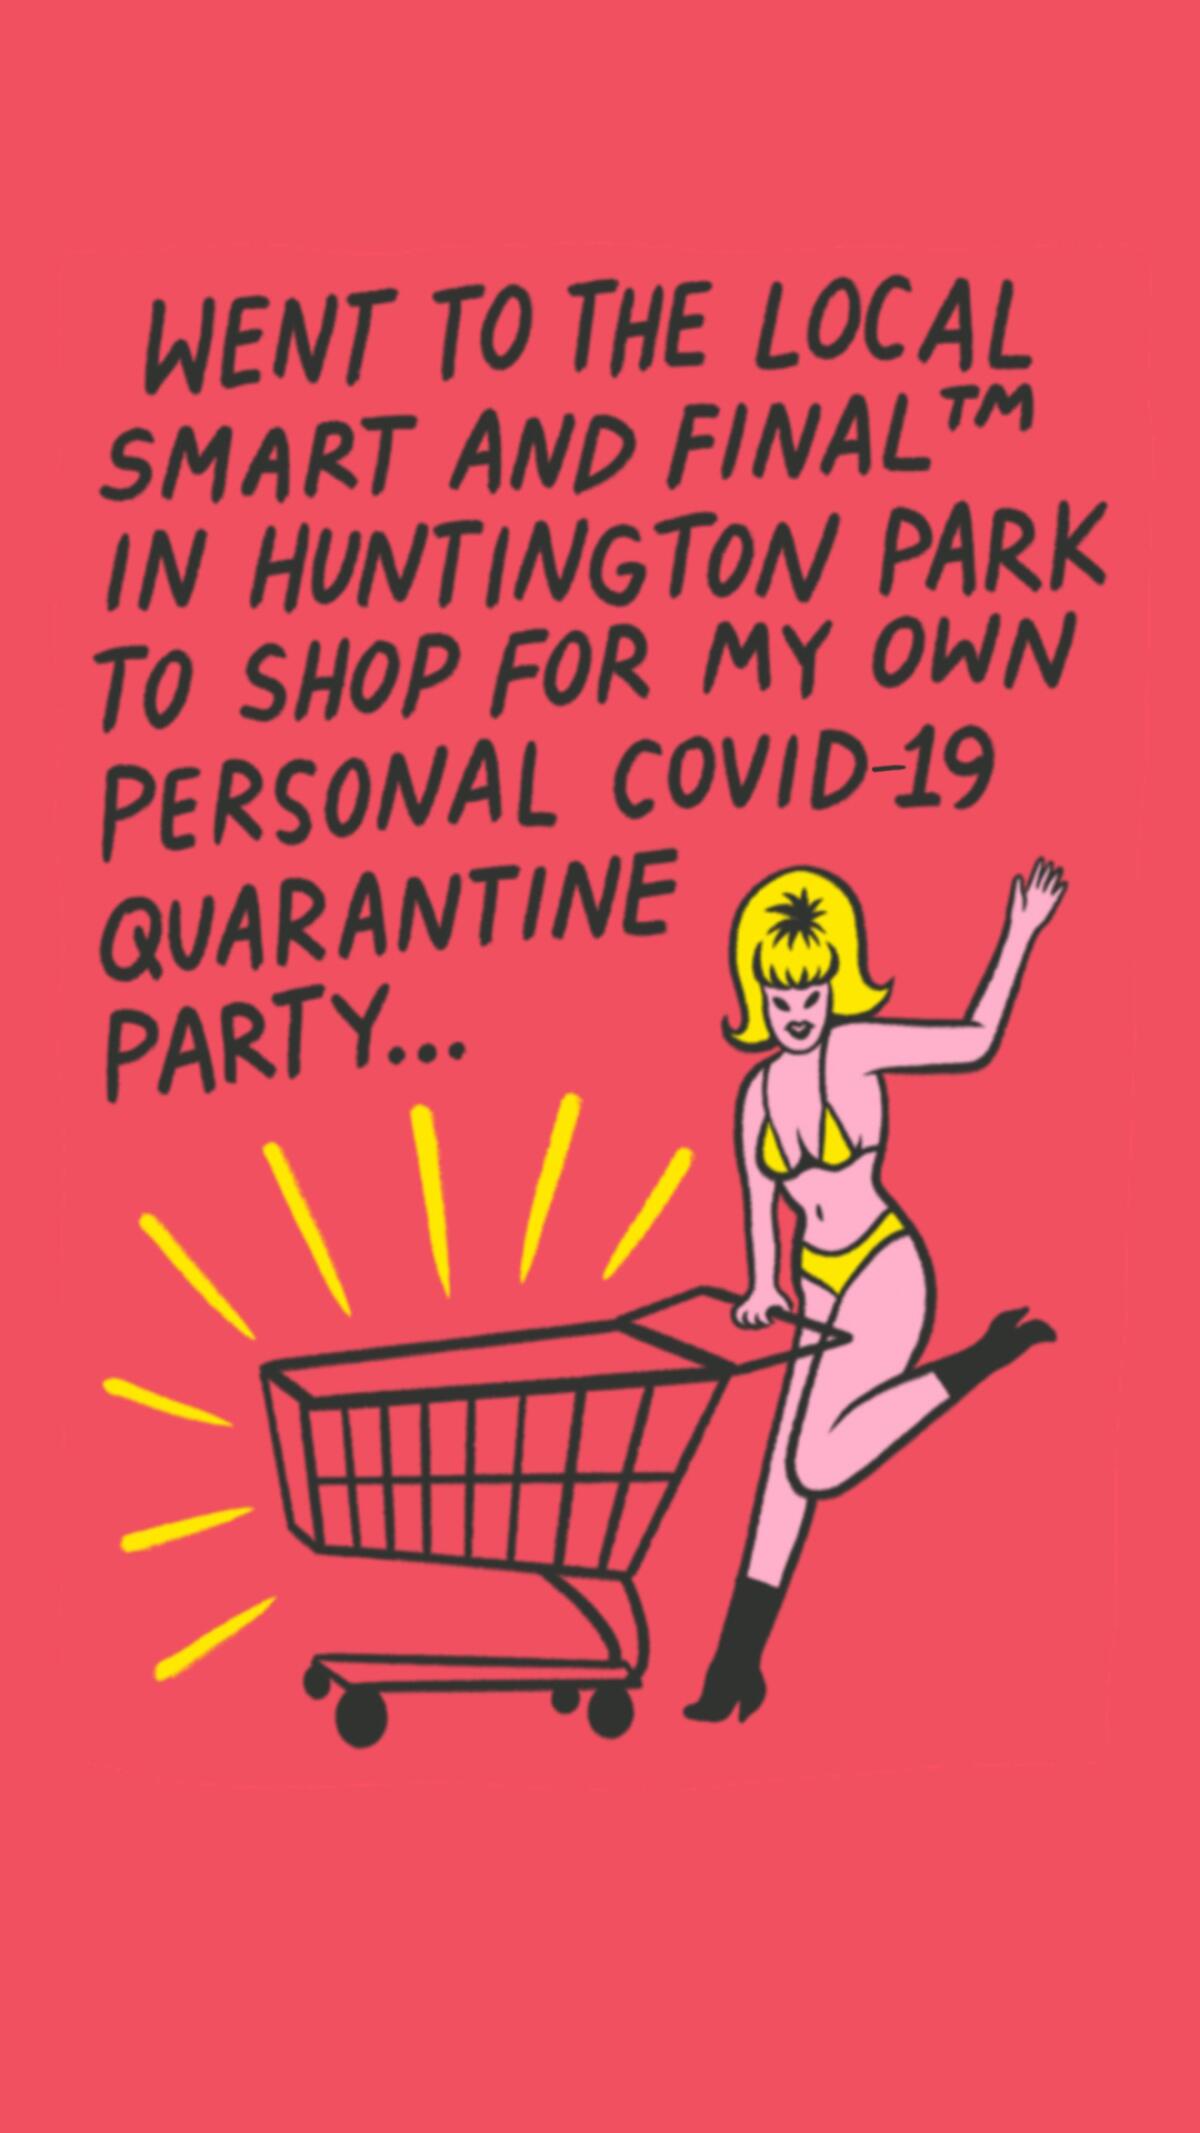 Shopping 4 the quarantine, a comic by Ruth Mora.